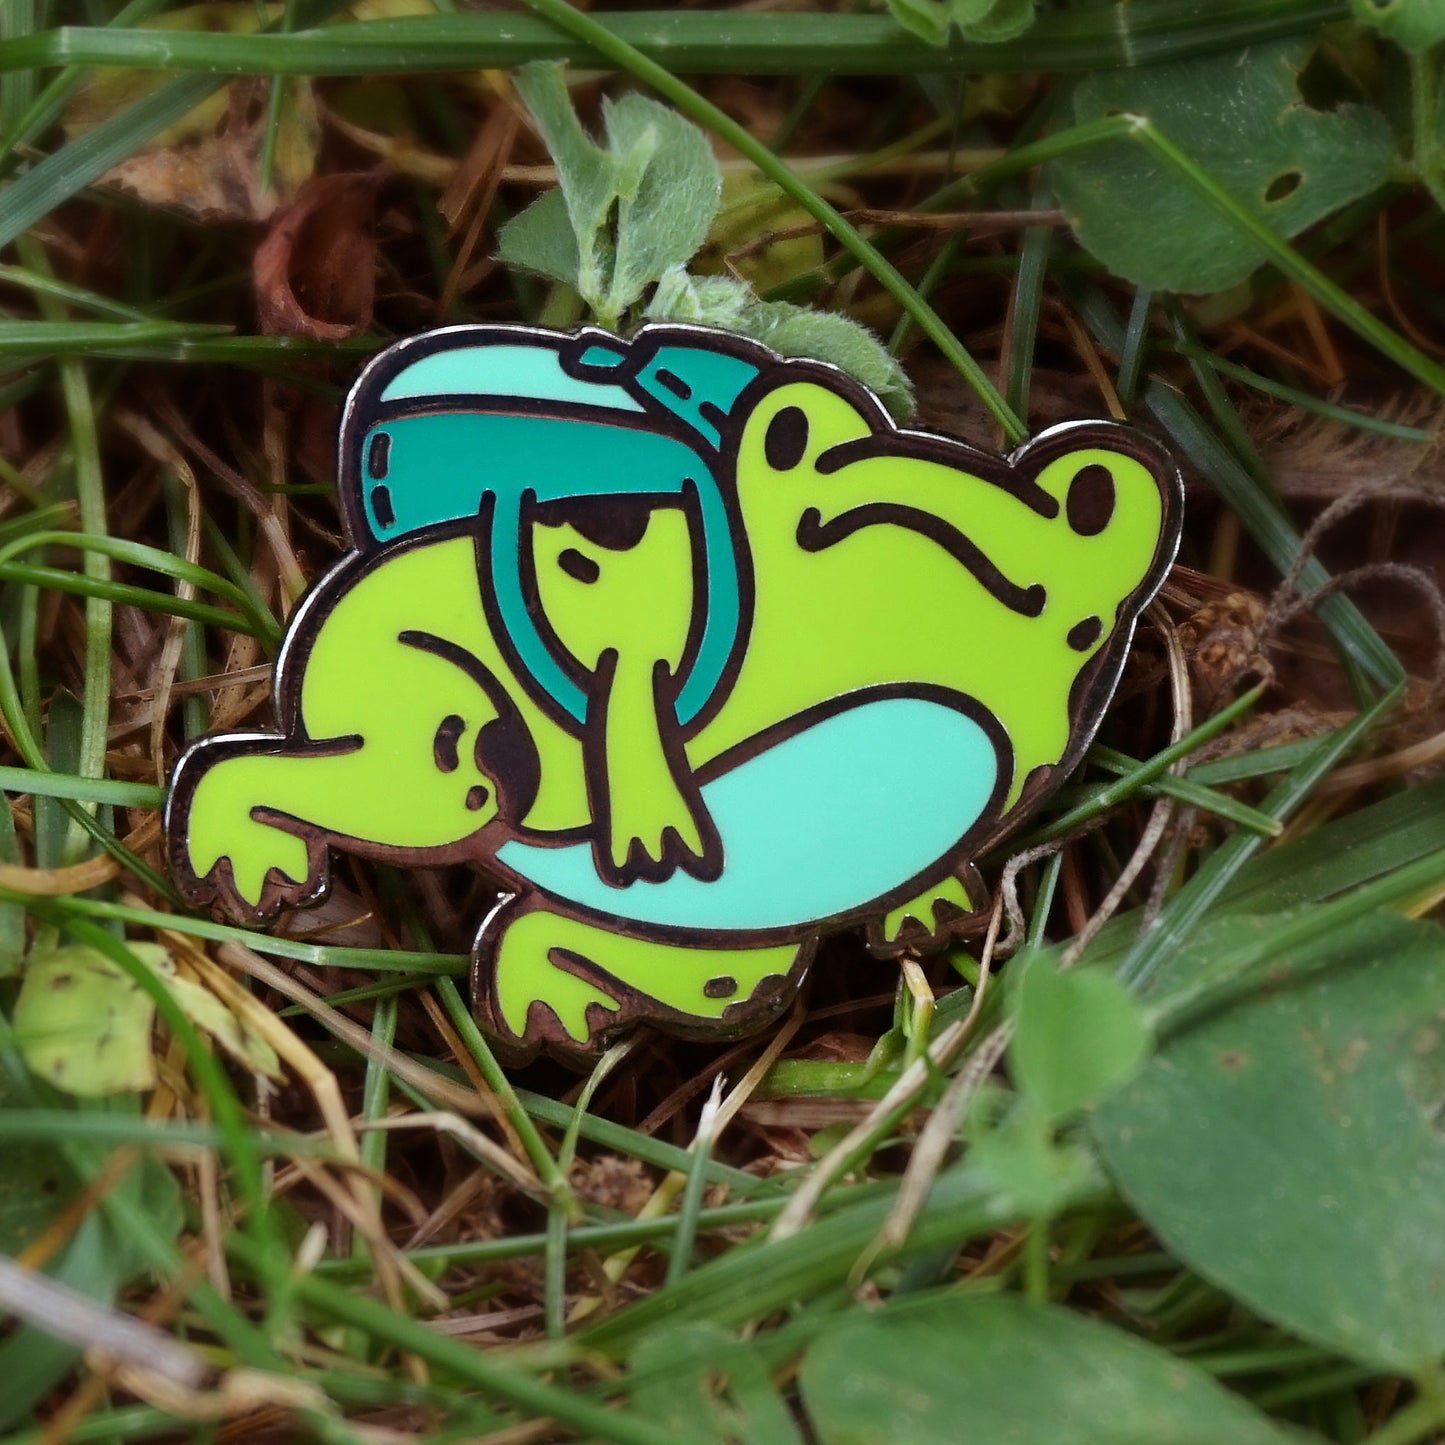 Backpack Frog - Enamel Pin